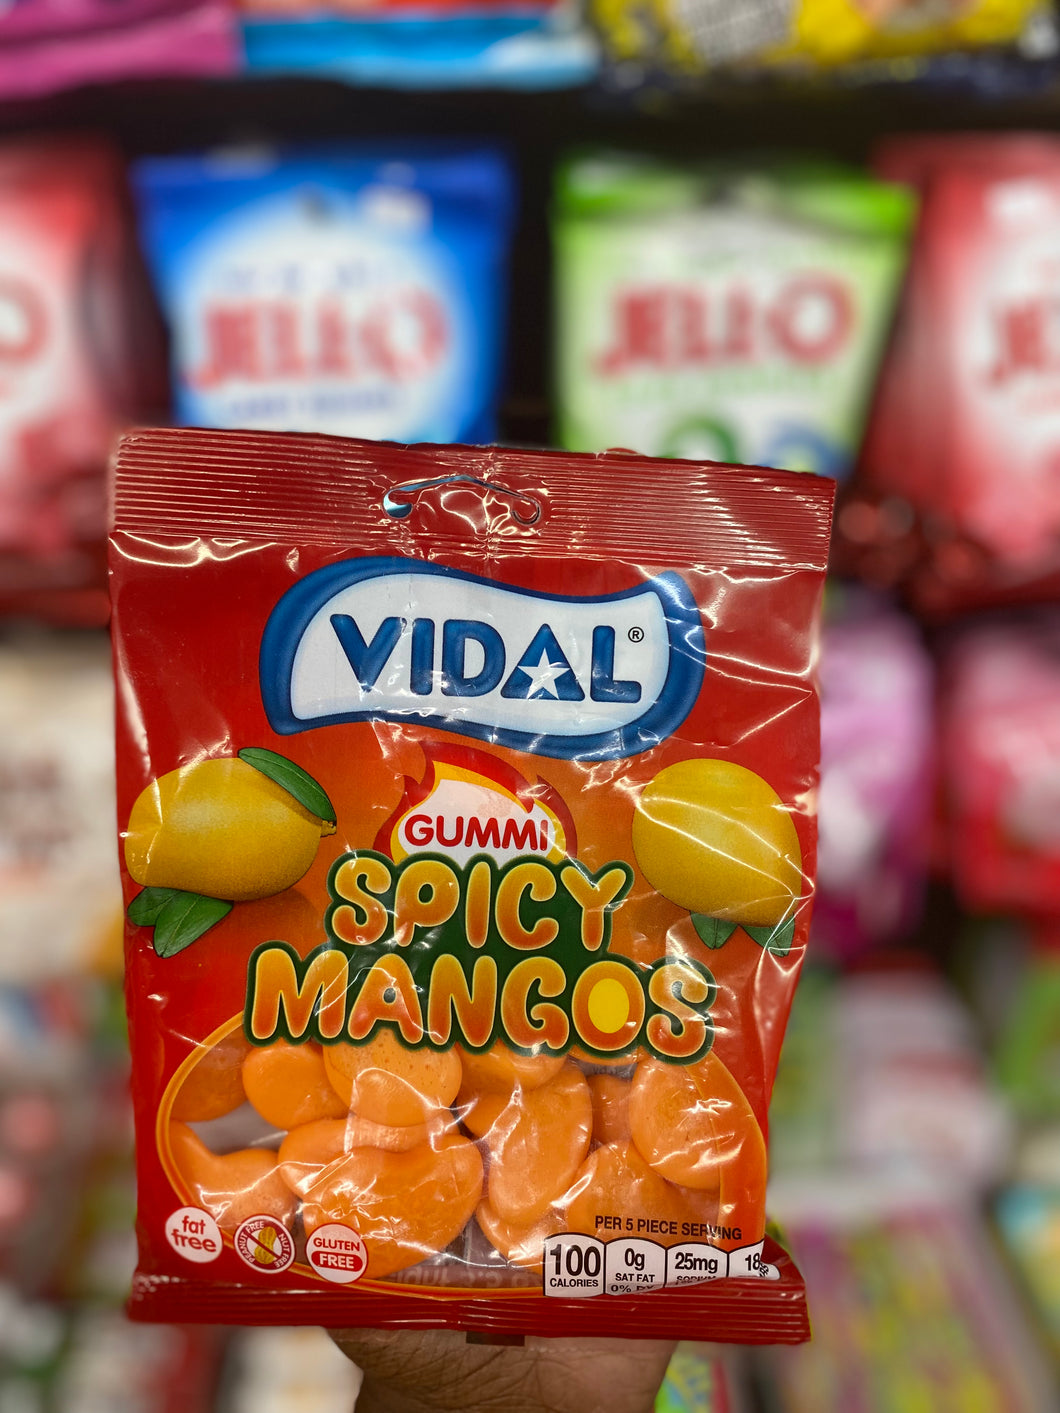 Vidal Gummi Spicy Mangos (USA)